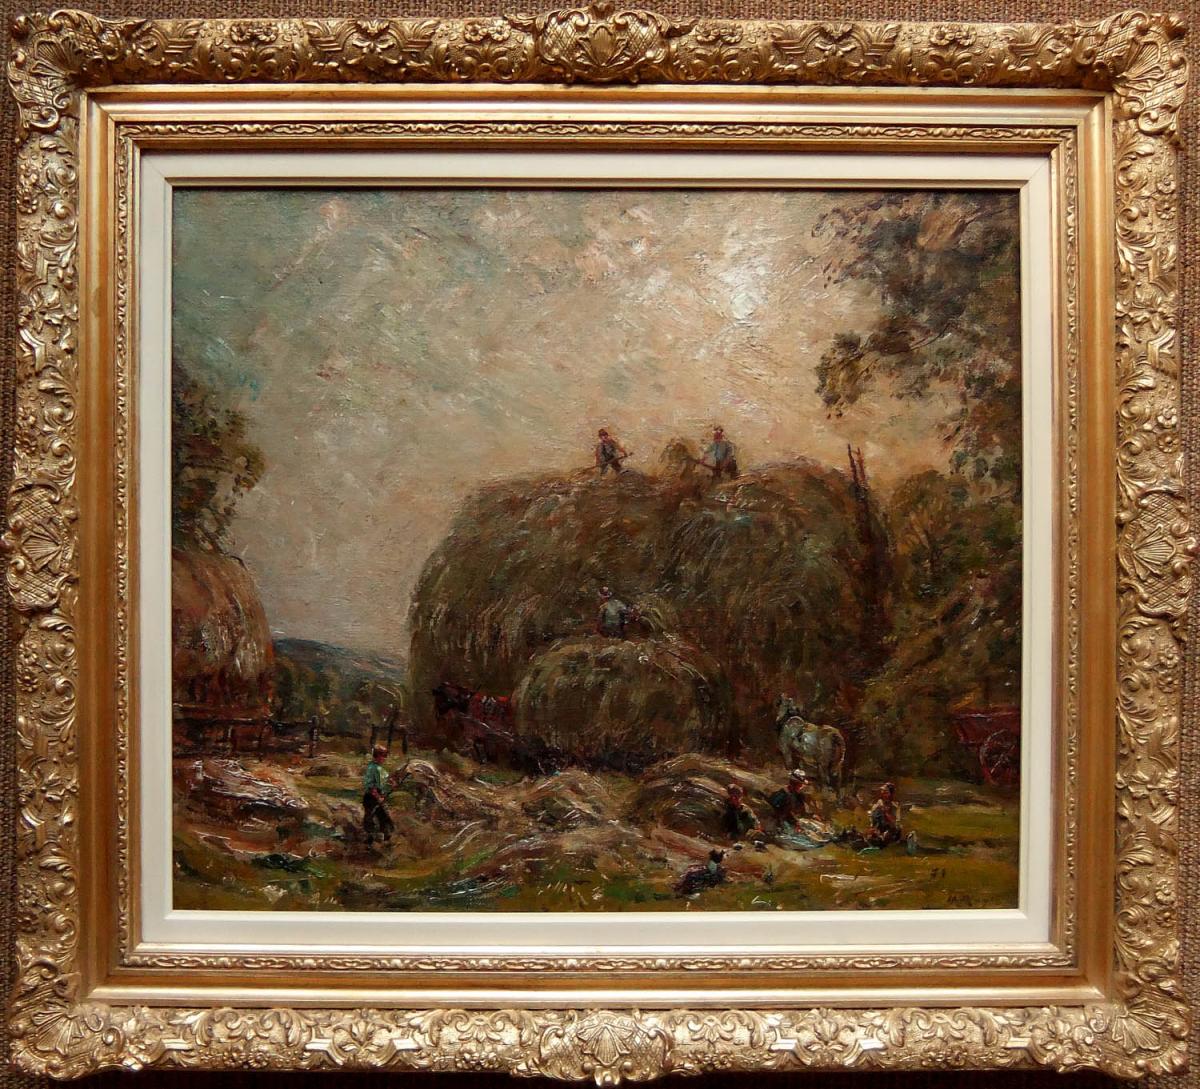 Herbert Royle "The Hay Rick" oil painting landscape